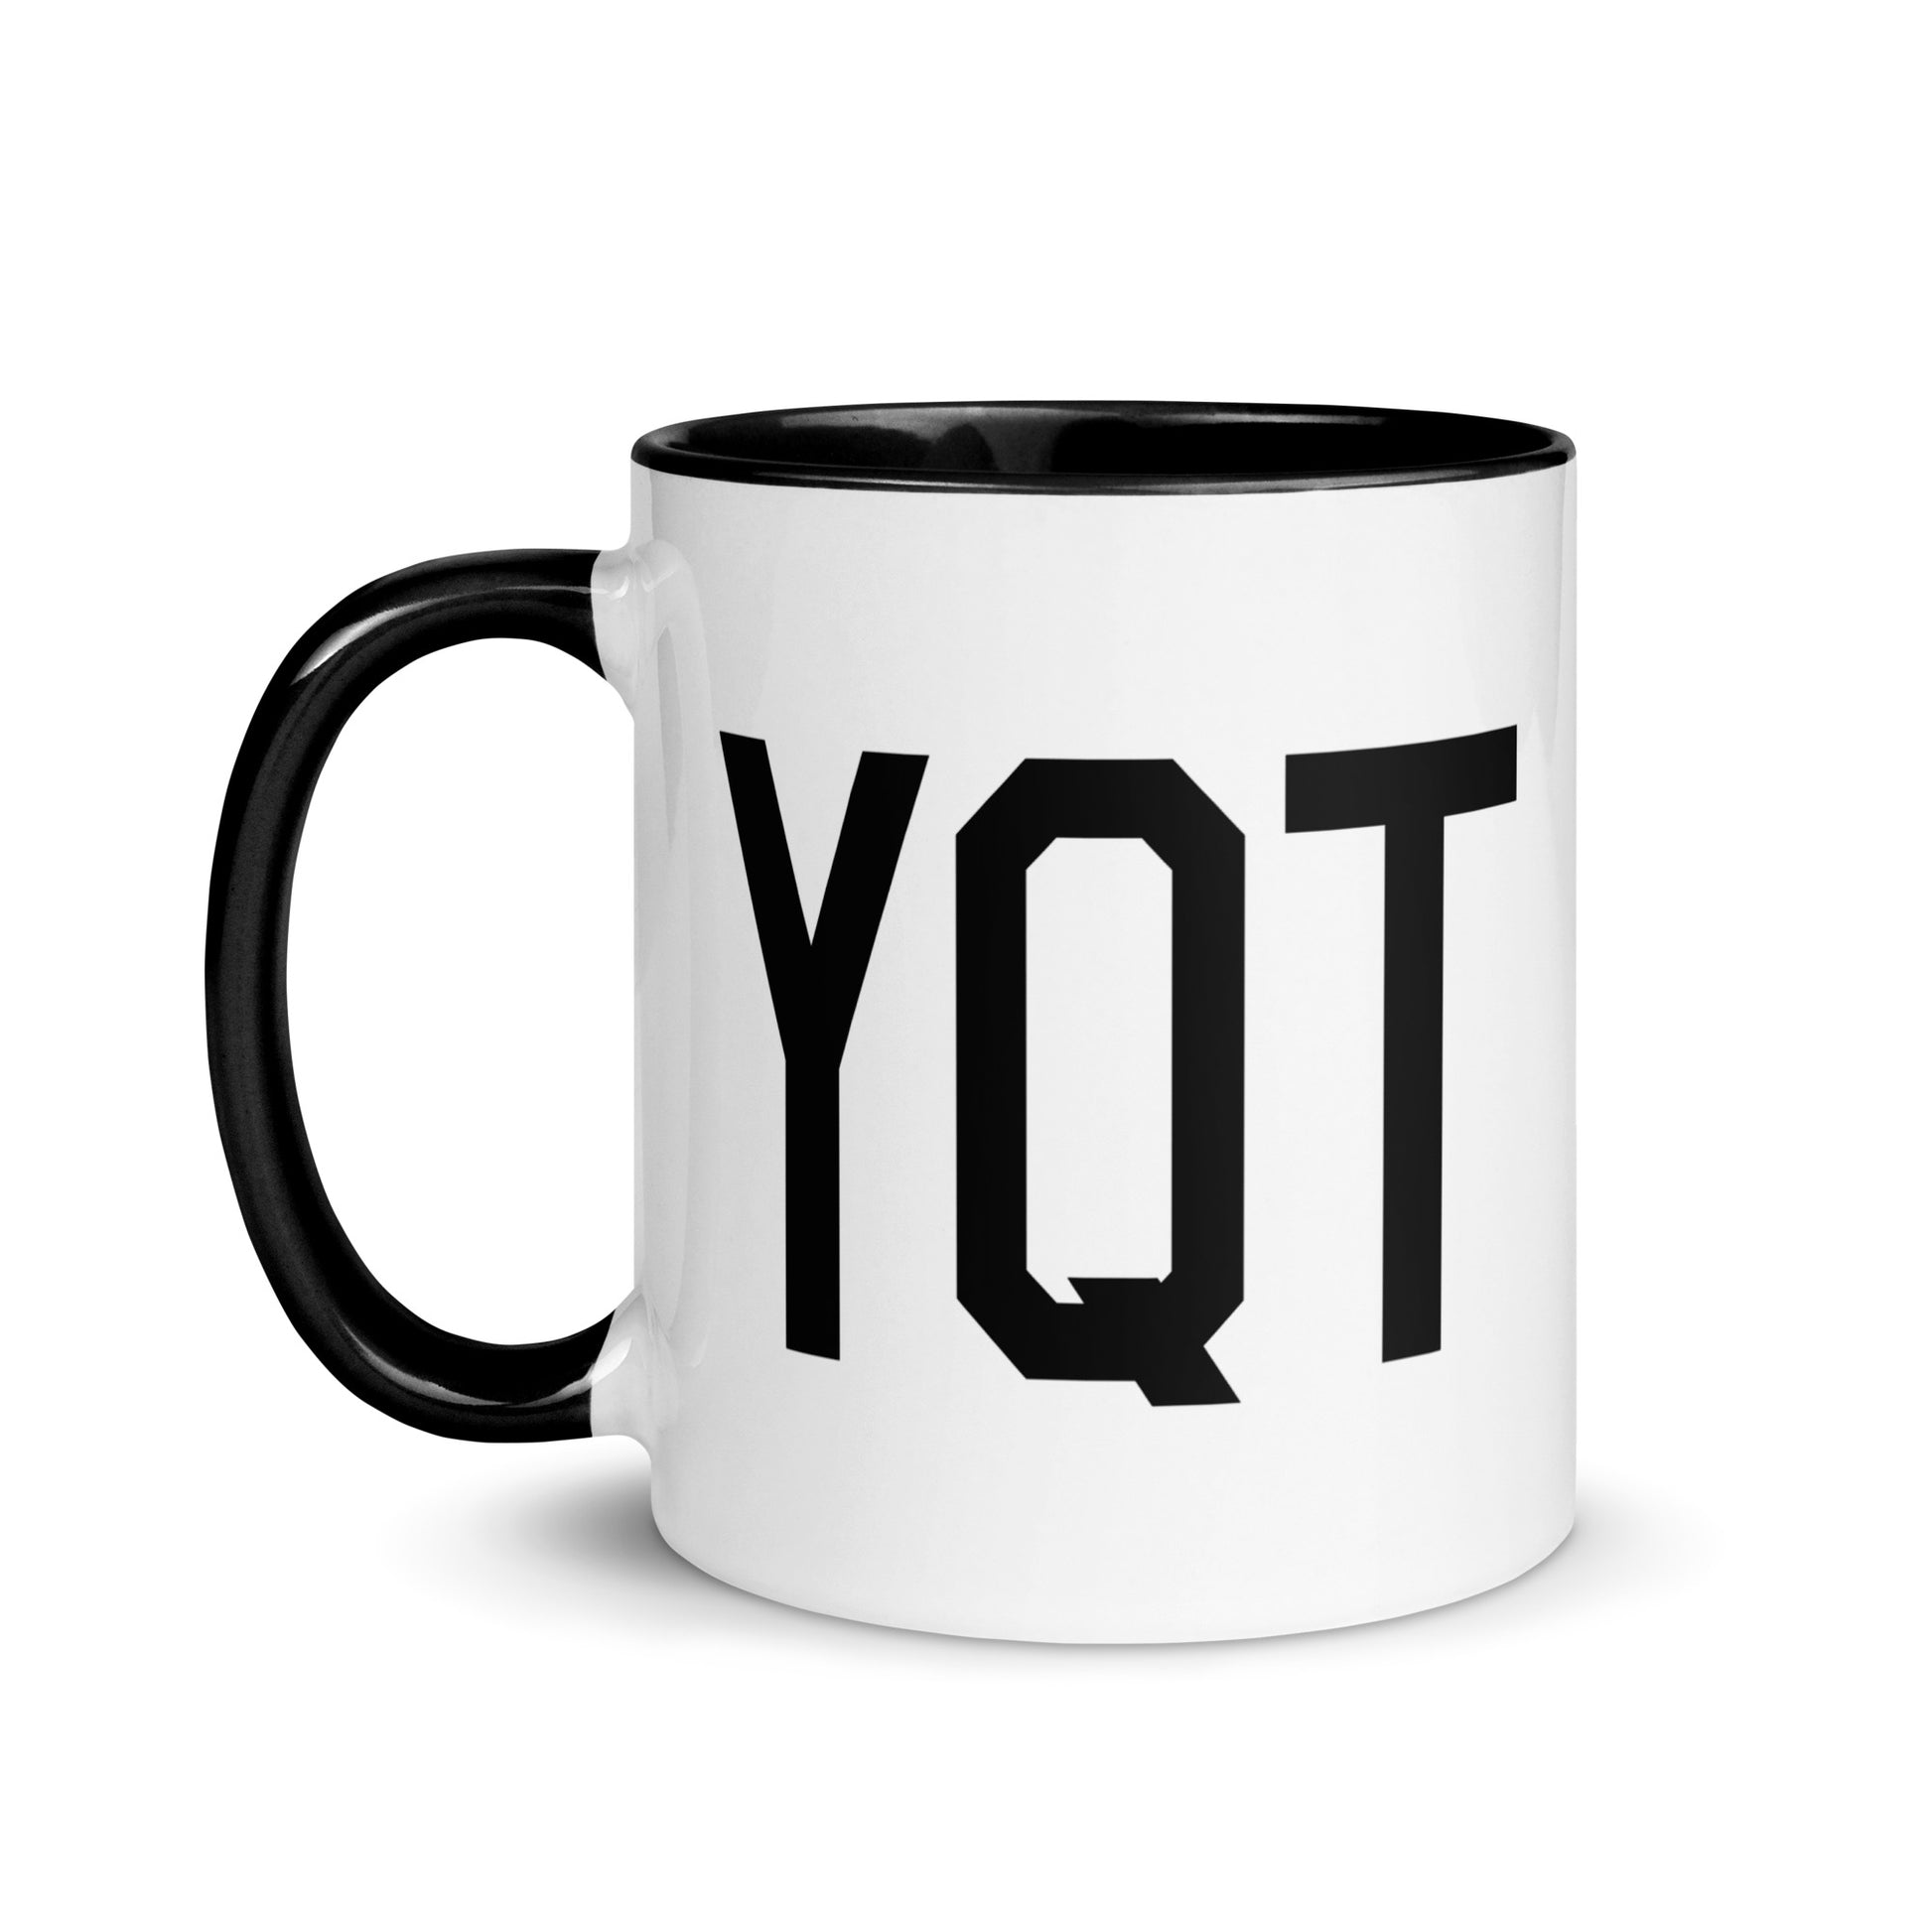 Airport Code Coffee Mug - Black • YQT Thunder Bay • YHM Designs - Image 03